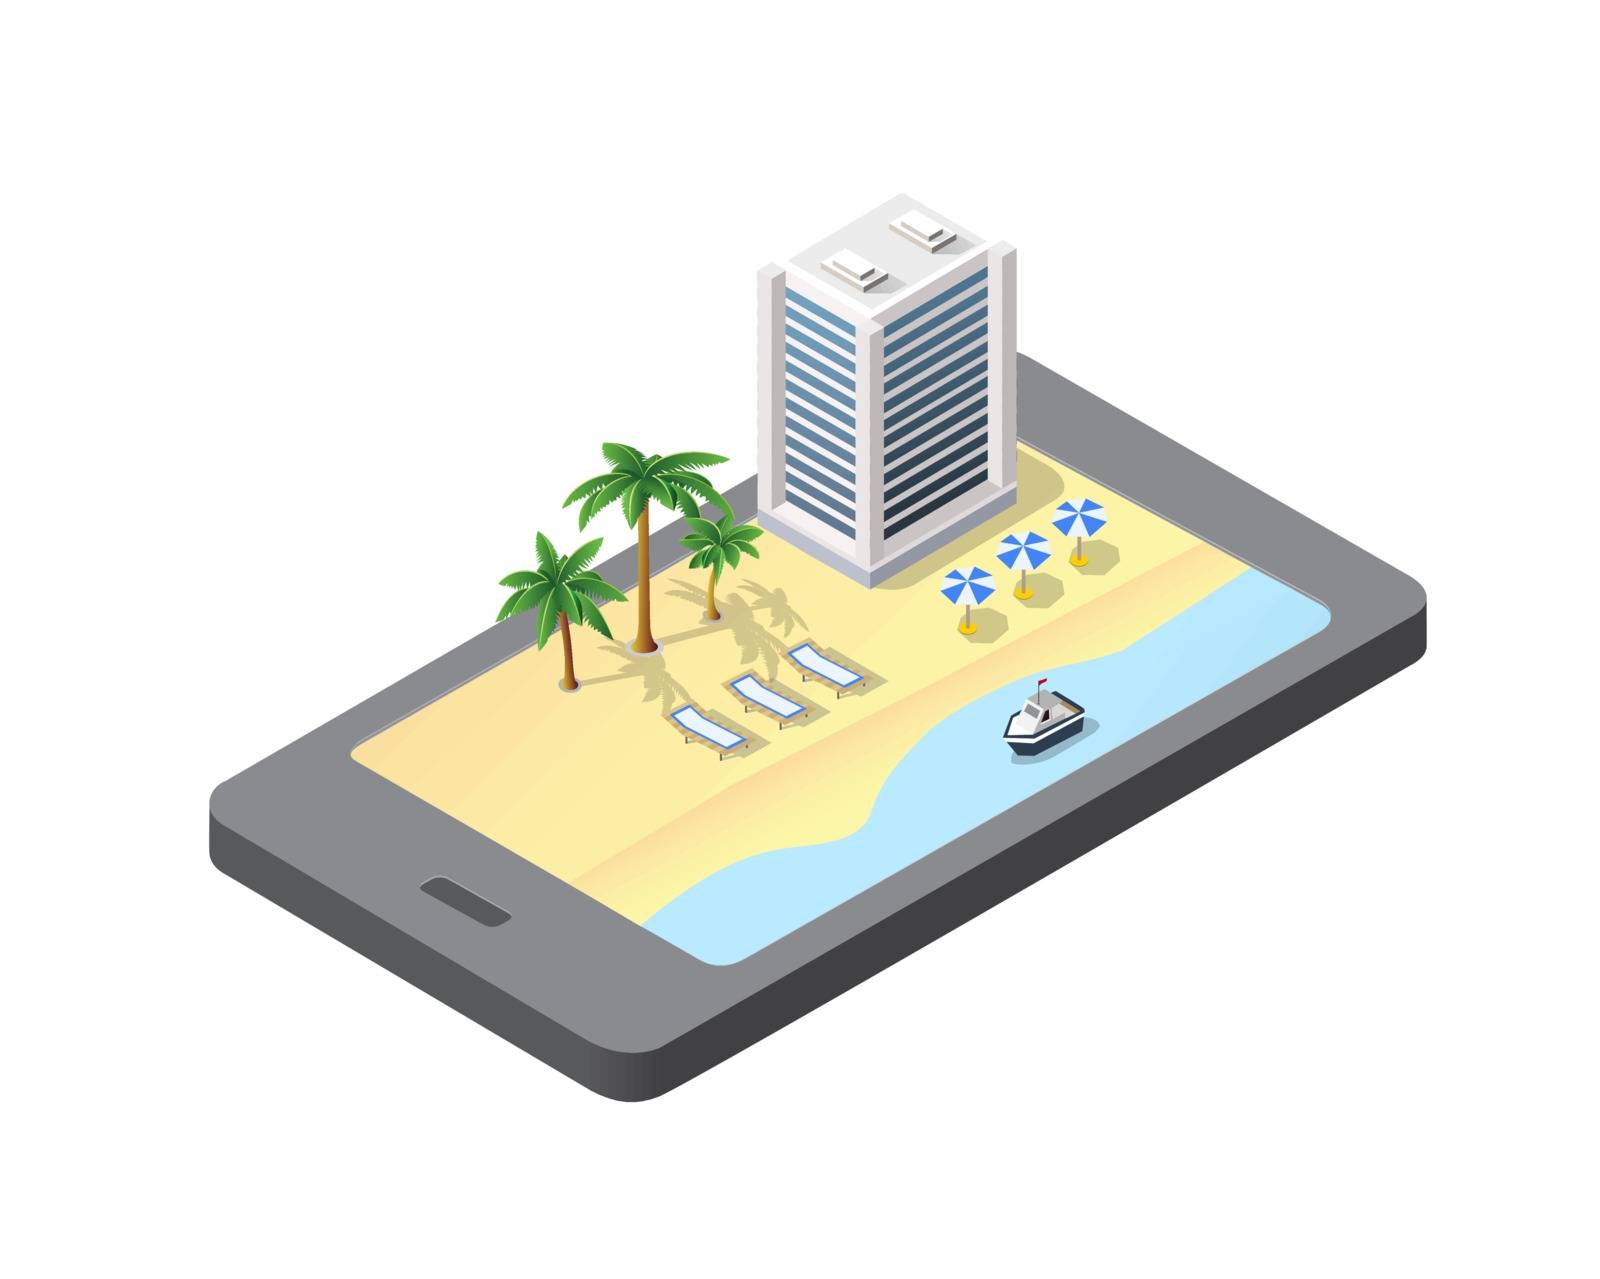 Phone concept of Travel beach hotel module block city urban cityscape of building set elements street landscape architecture illustration